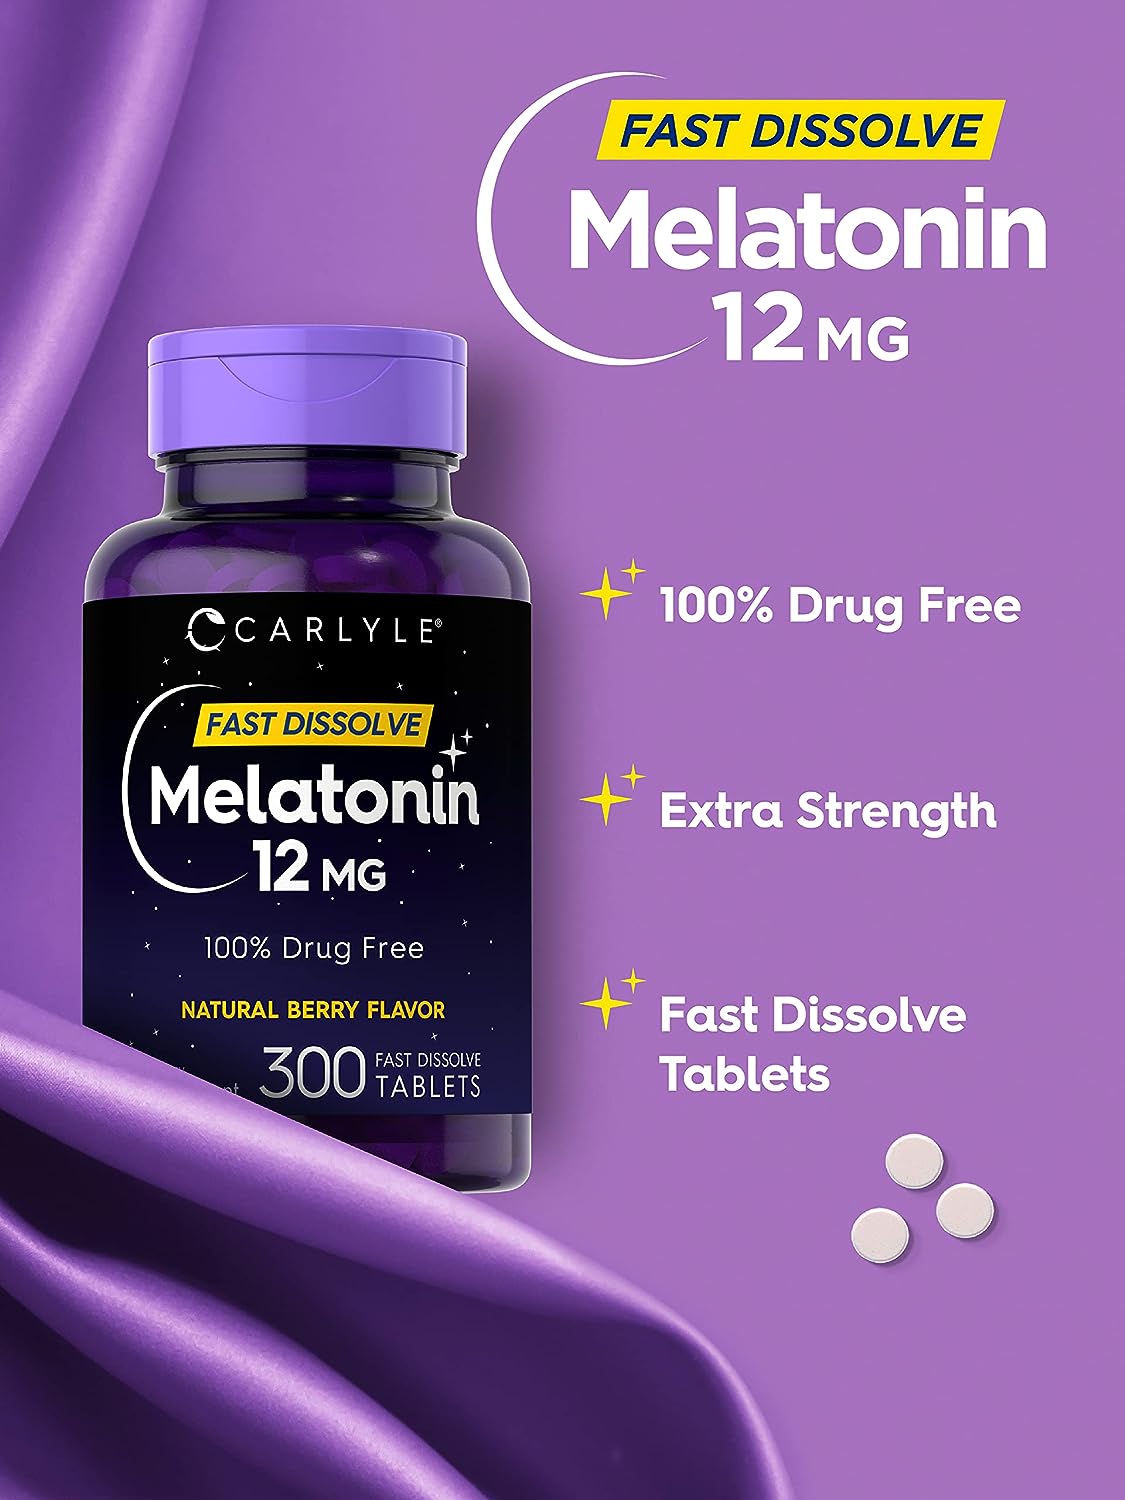 Carlyle Melatonin 12 mg Fast Dissolve 300 Tablets Nighttime Sleep Aid Natural Berry Flavor Vegetarian Gluten Free